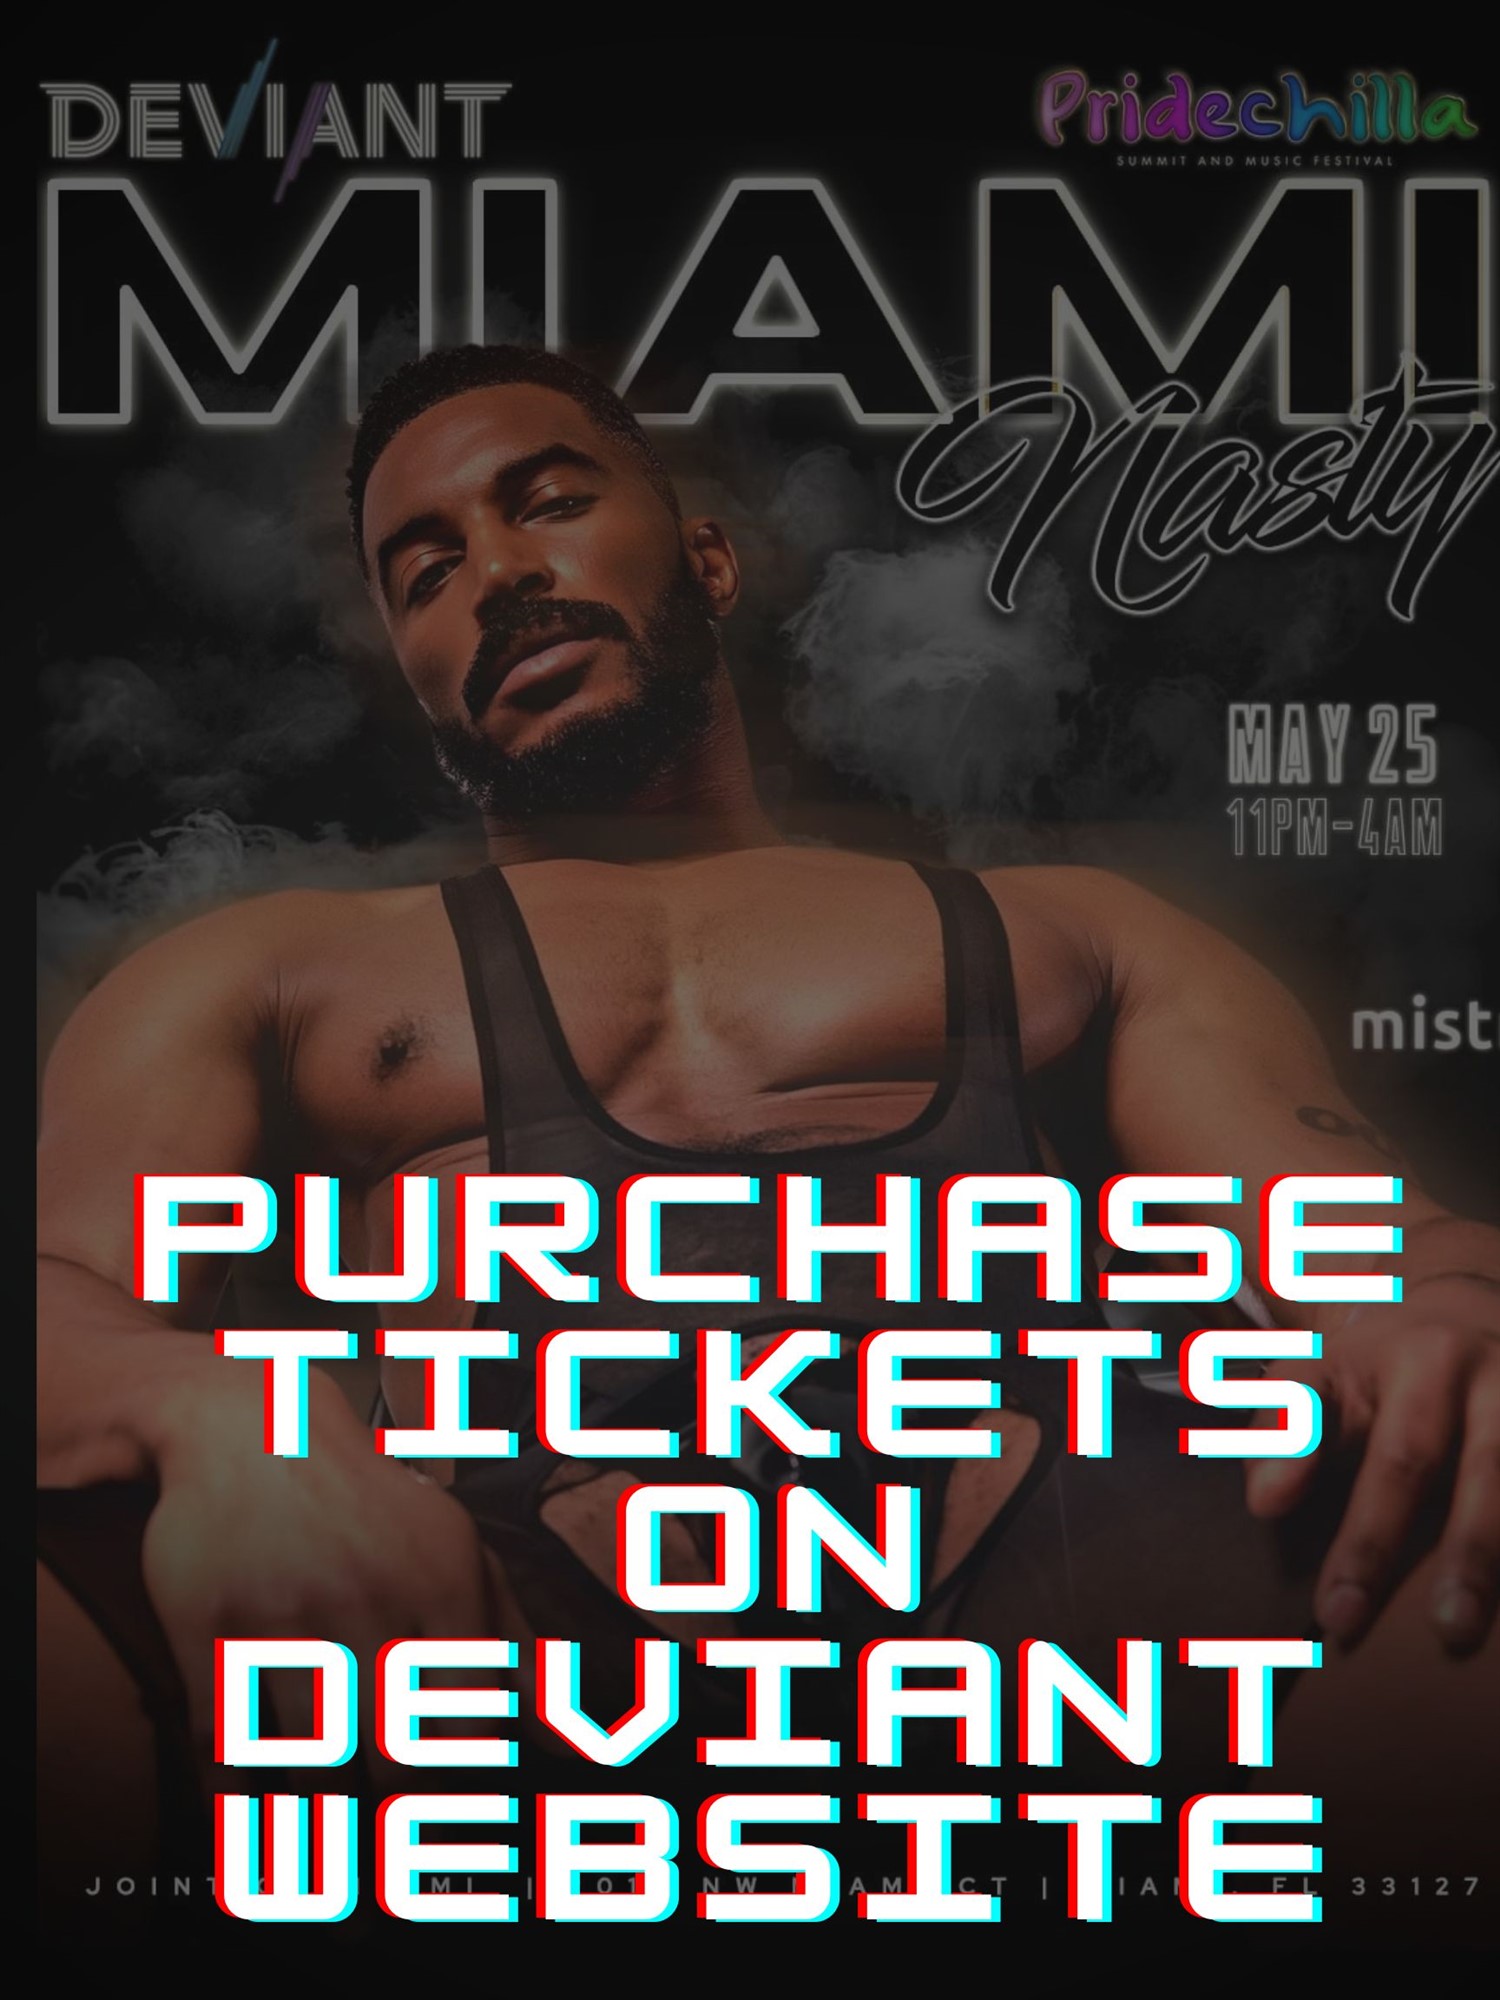 DEVIANT + Pridechilla NASTY MIAMI https://www.deviant.live/party/miami on May 25, 22:00@JOINT OF MIAMI - Buy tickets and Get information on Afro Pride Federation pridechillamusicfestival